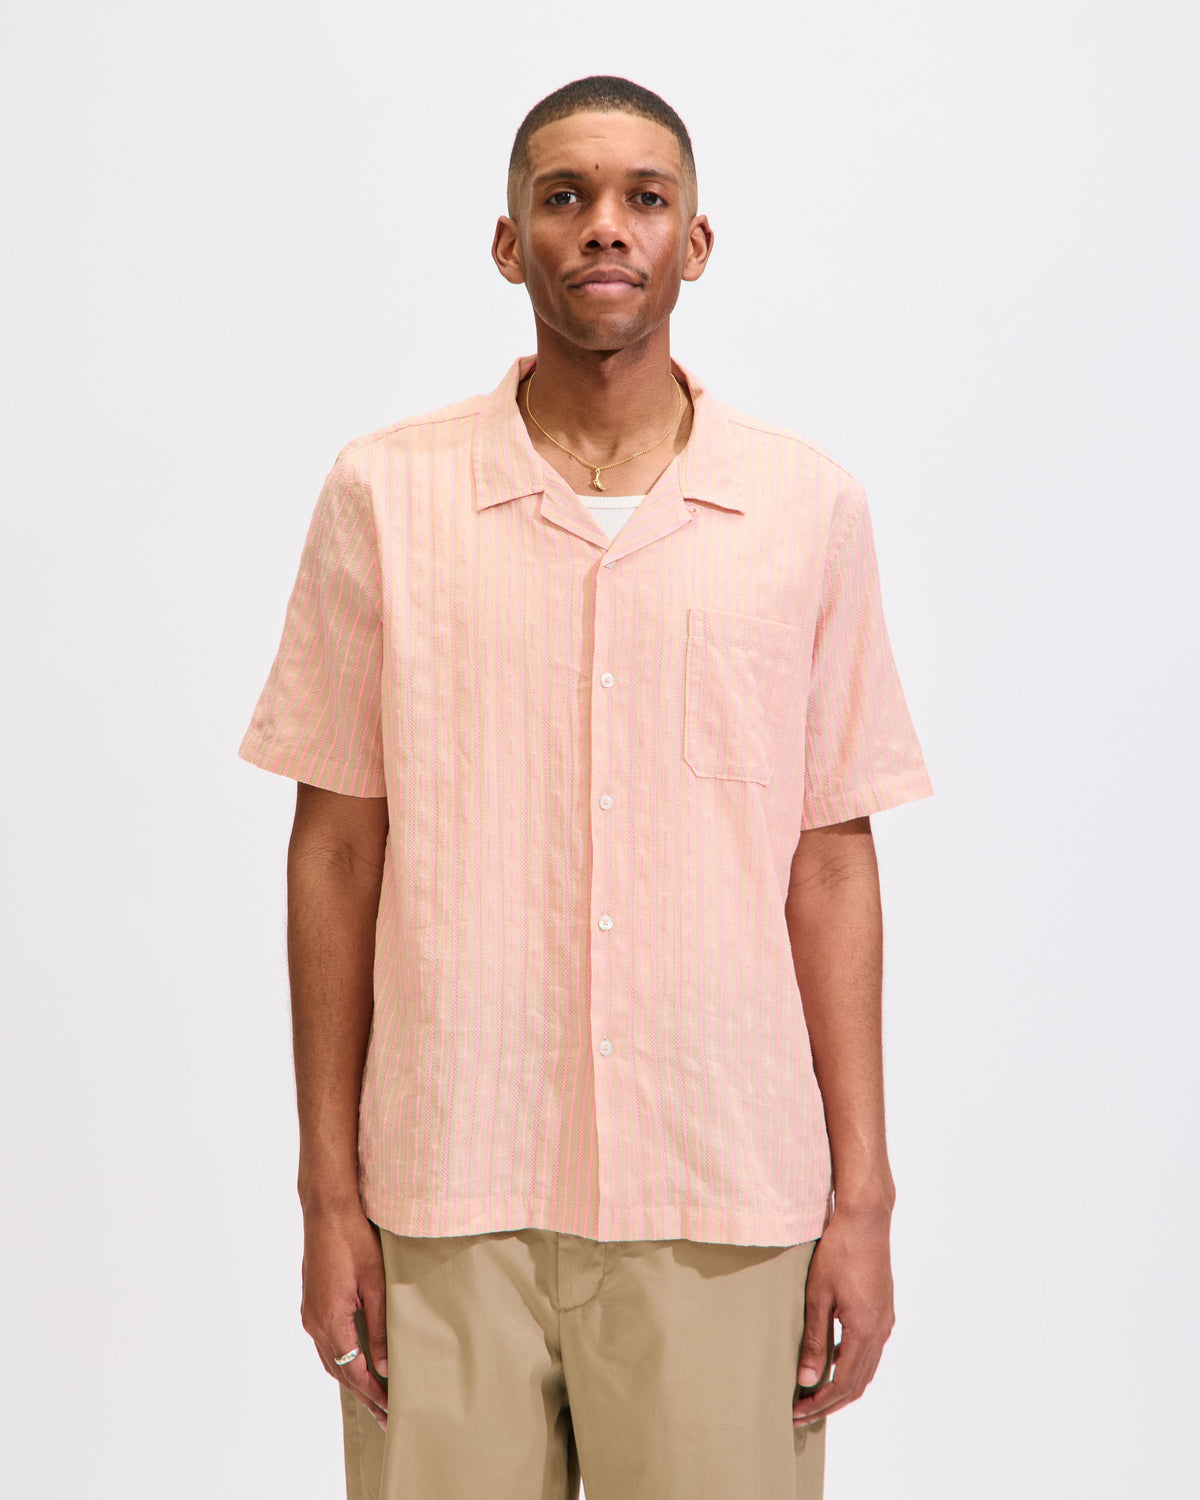 Road Shirt In Beige/Pink Fluro Cotton